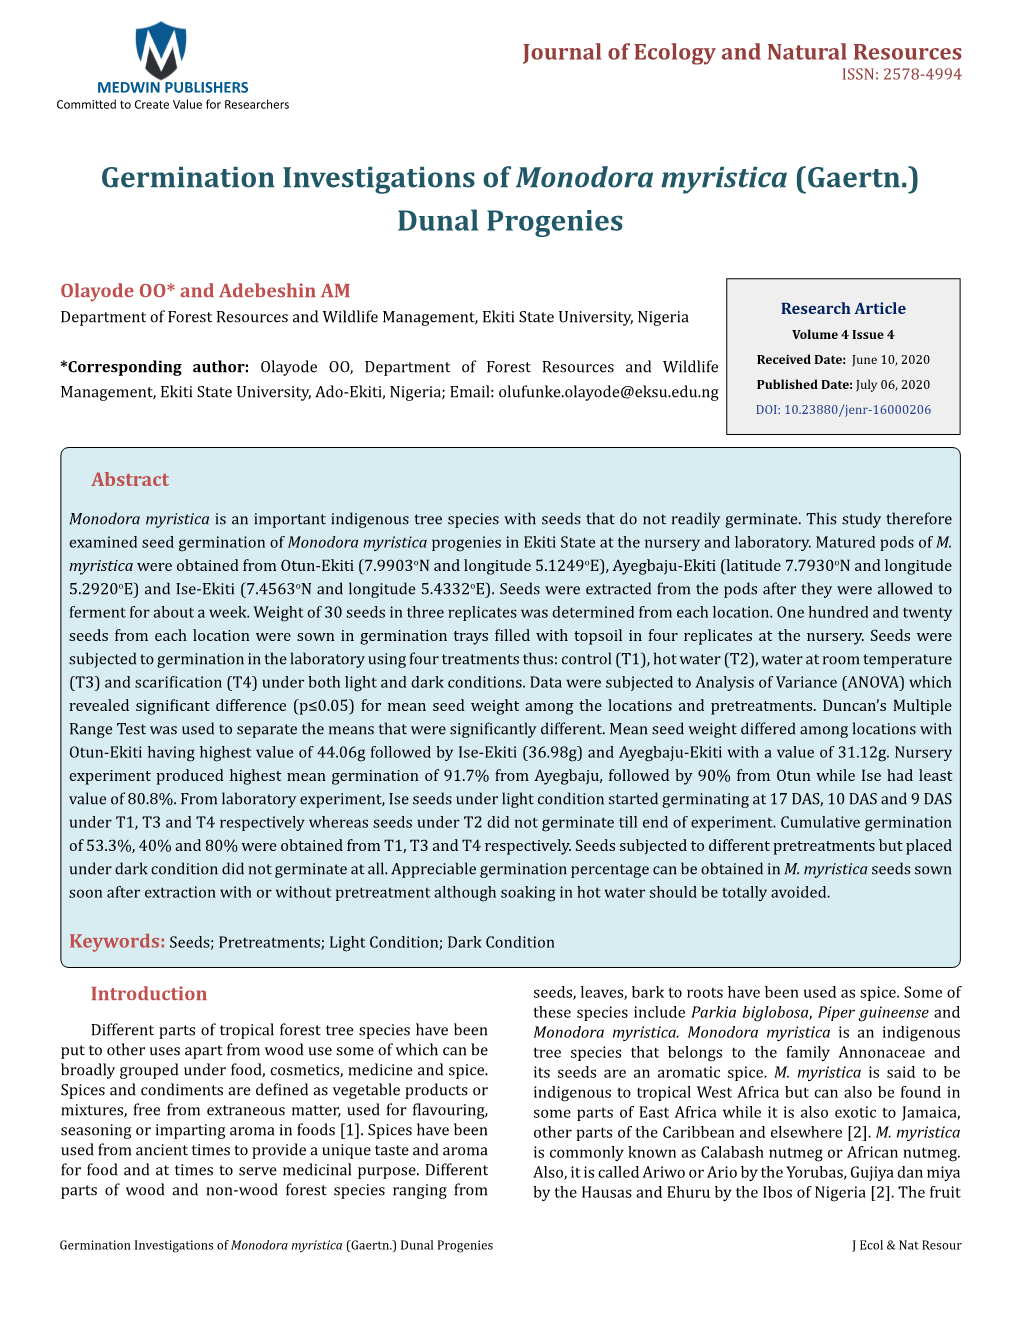 Germination Investigations of Monodora Myristica (Gaertn.) Dunal Progenies